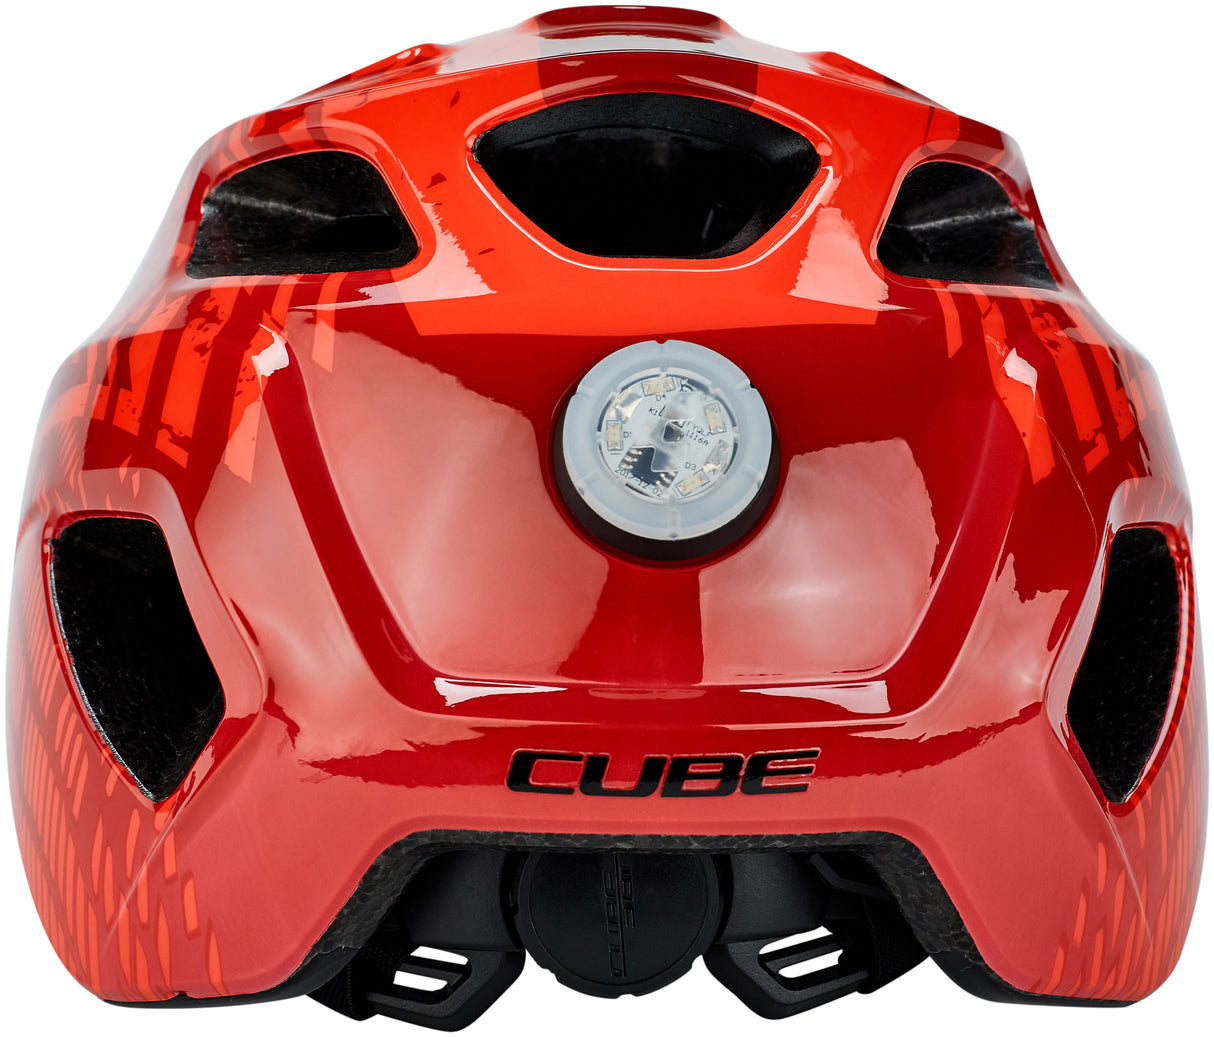 CUBE helm ANT rode splash